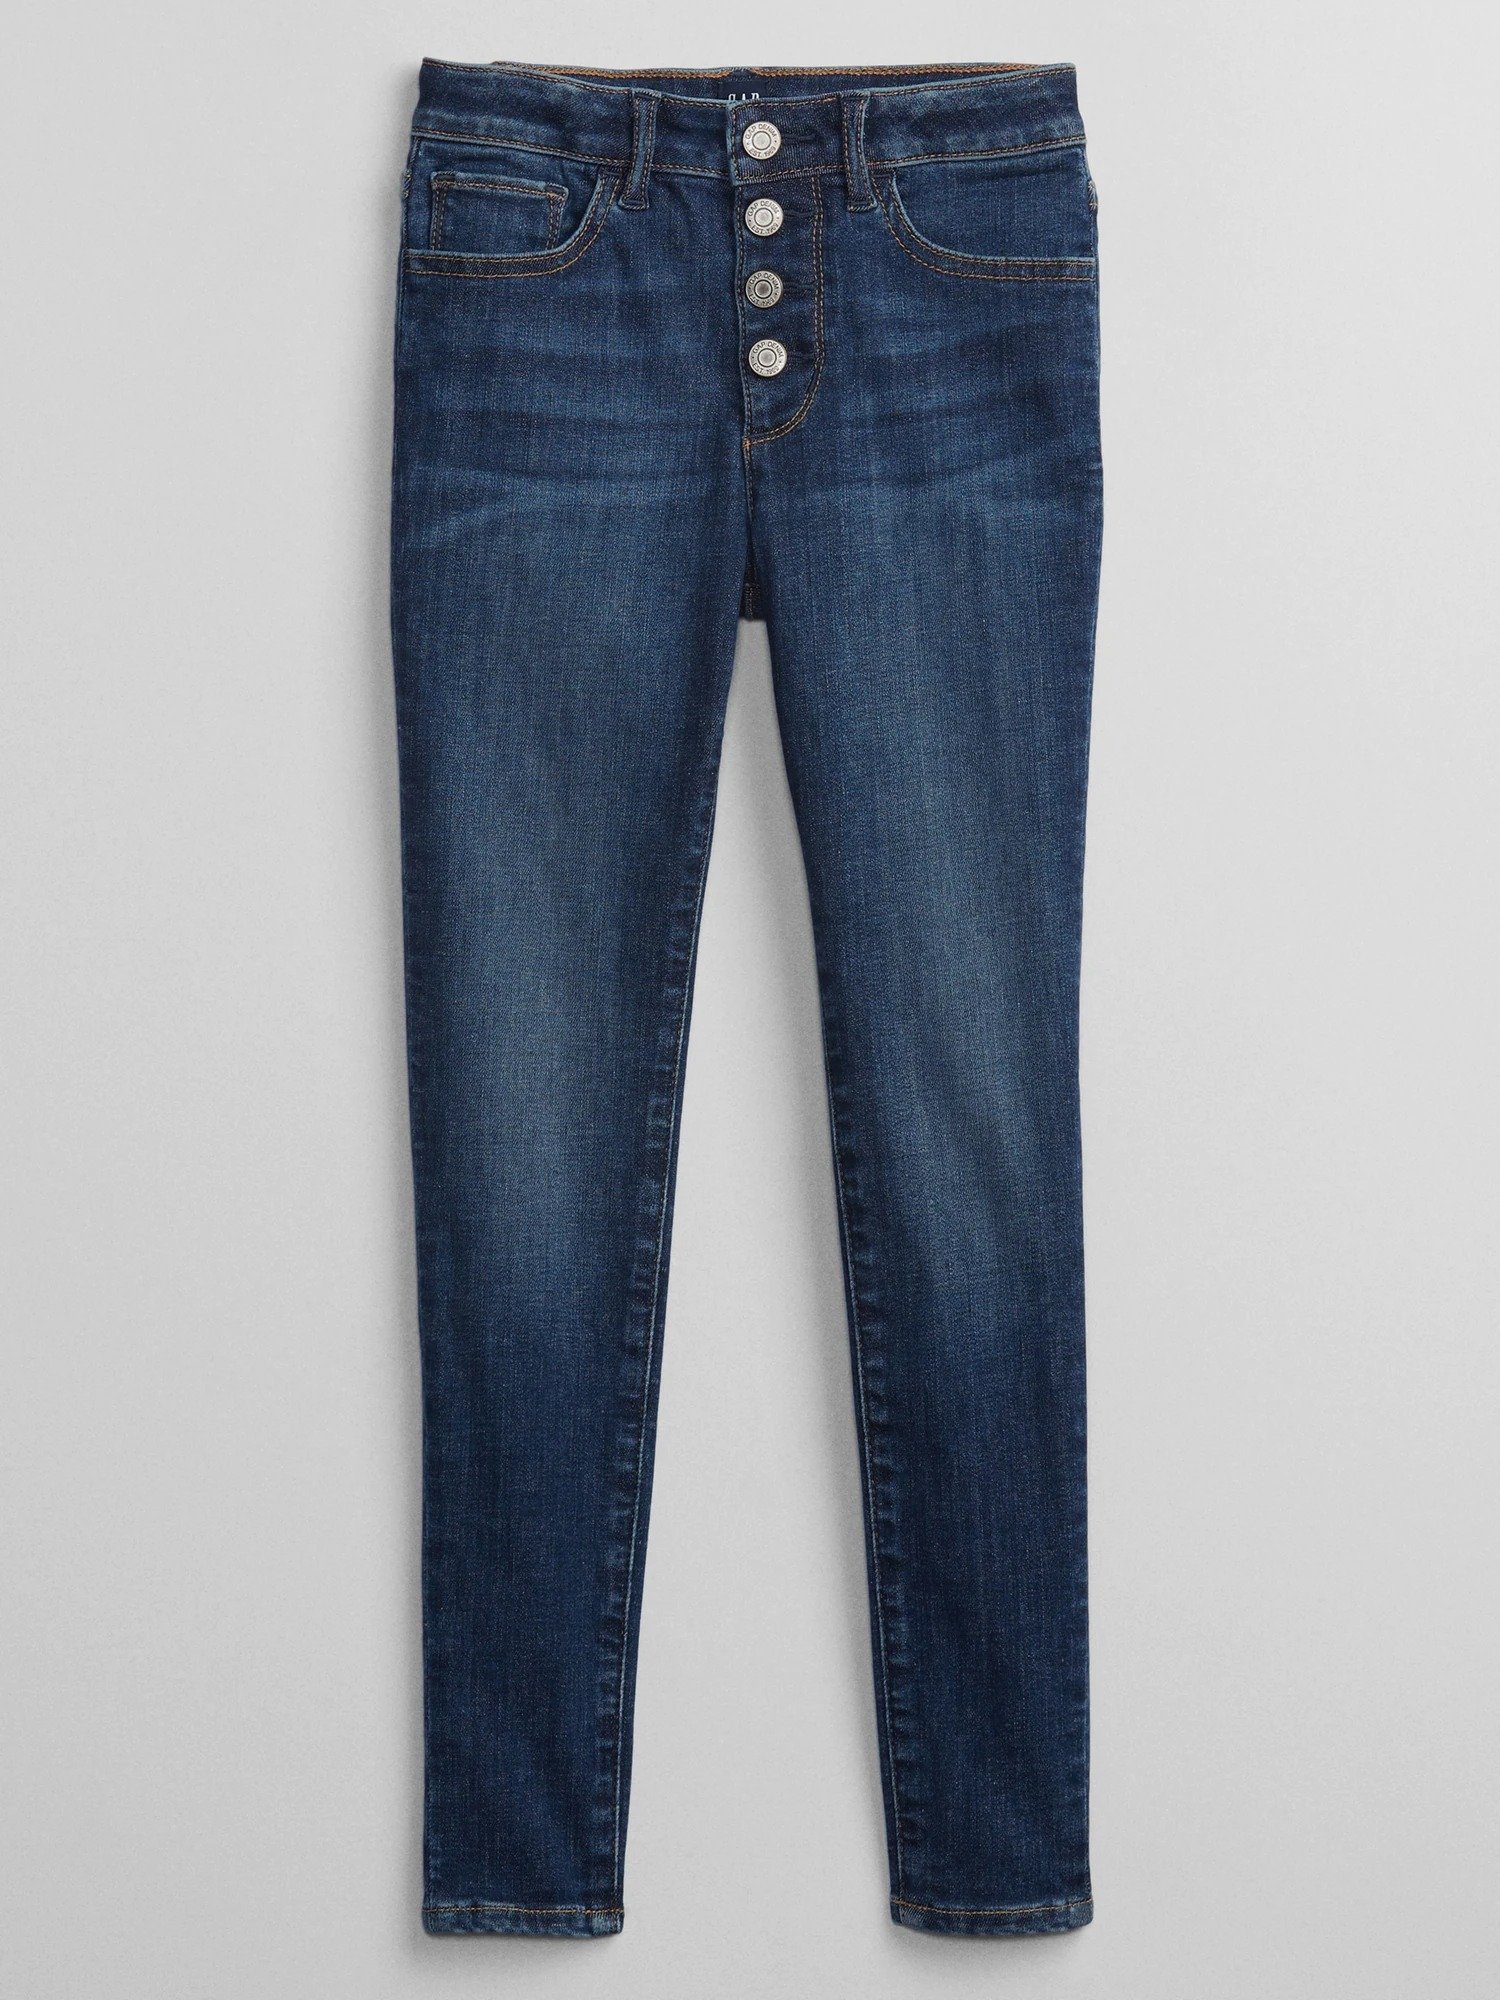 Washwell™ High Rise Legging Jean product image